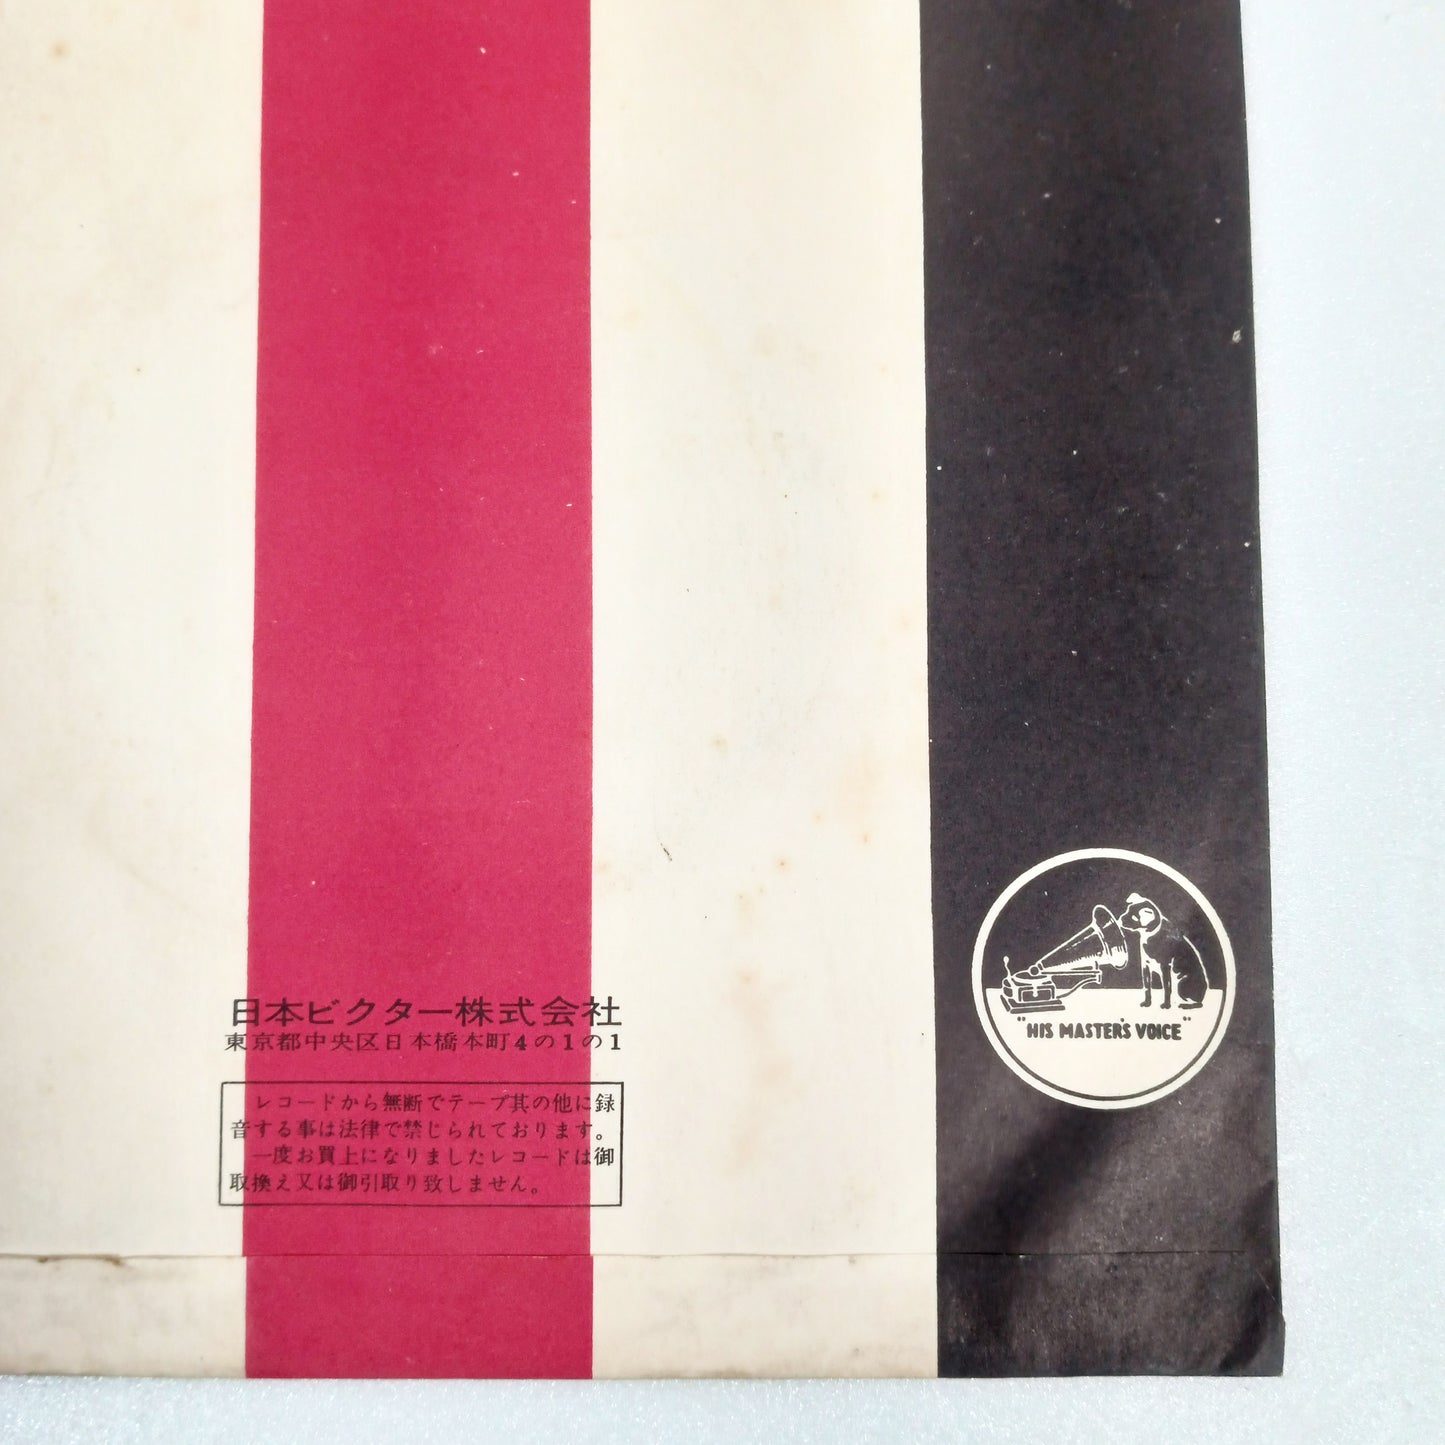 1965 Teru Teru Bozu Don't Cry Hiroshi Wada and Mahina Stars/Ayako Fuji Japanese record vintage